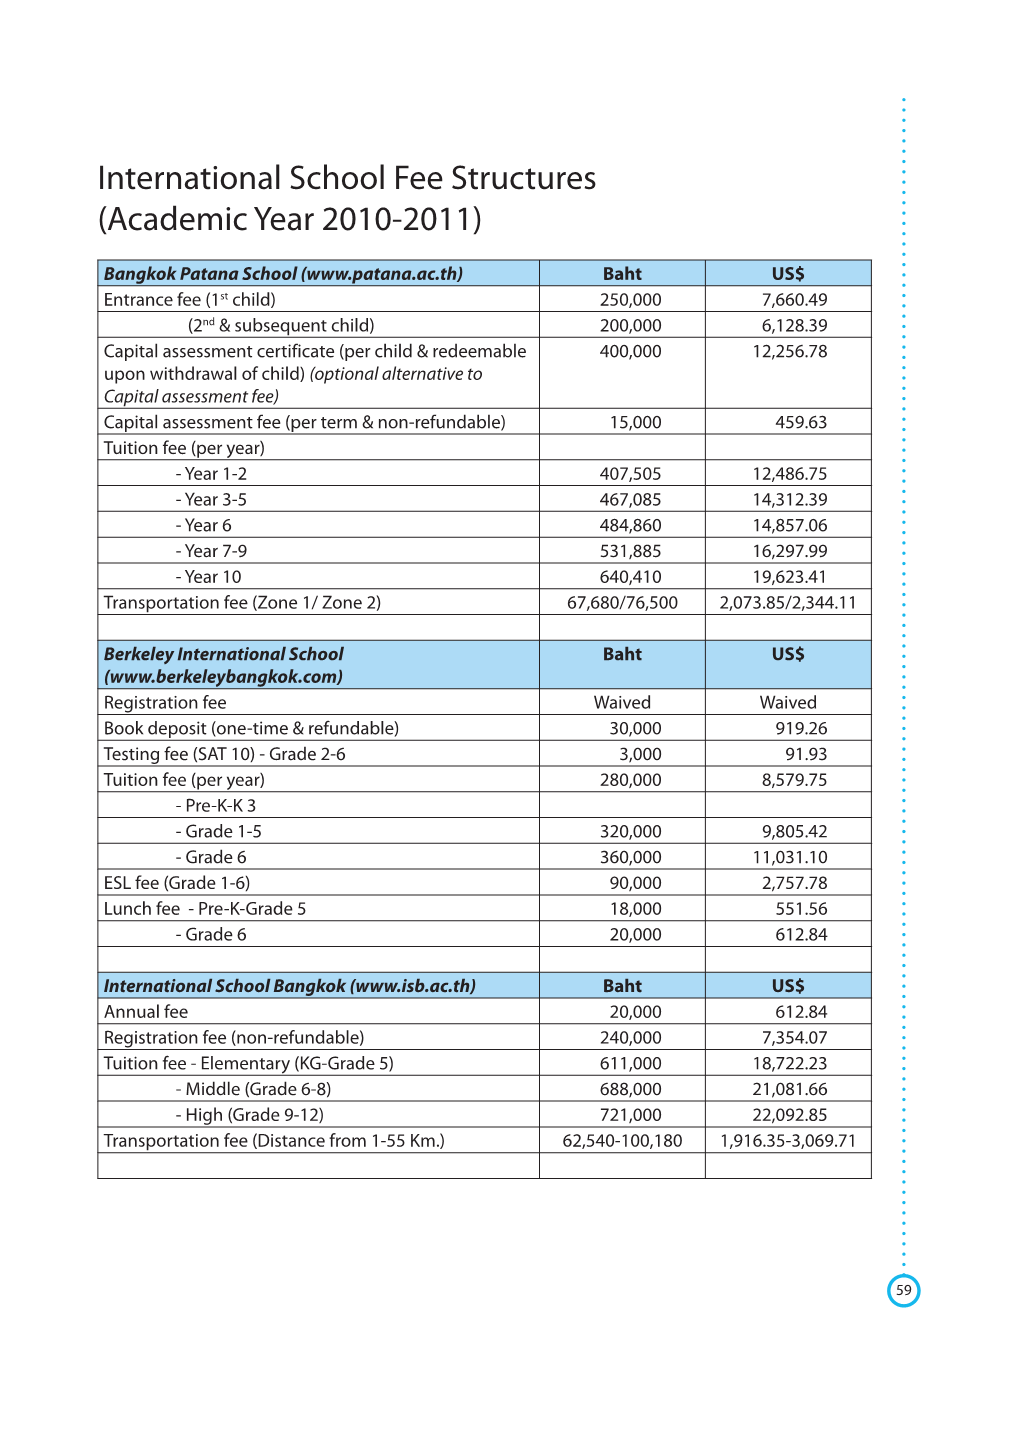 International School Fee Structures (Academic Year 2010-2011)